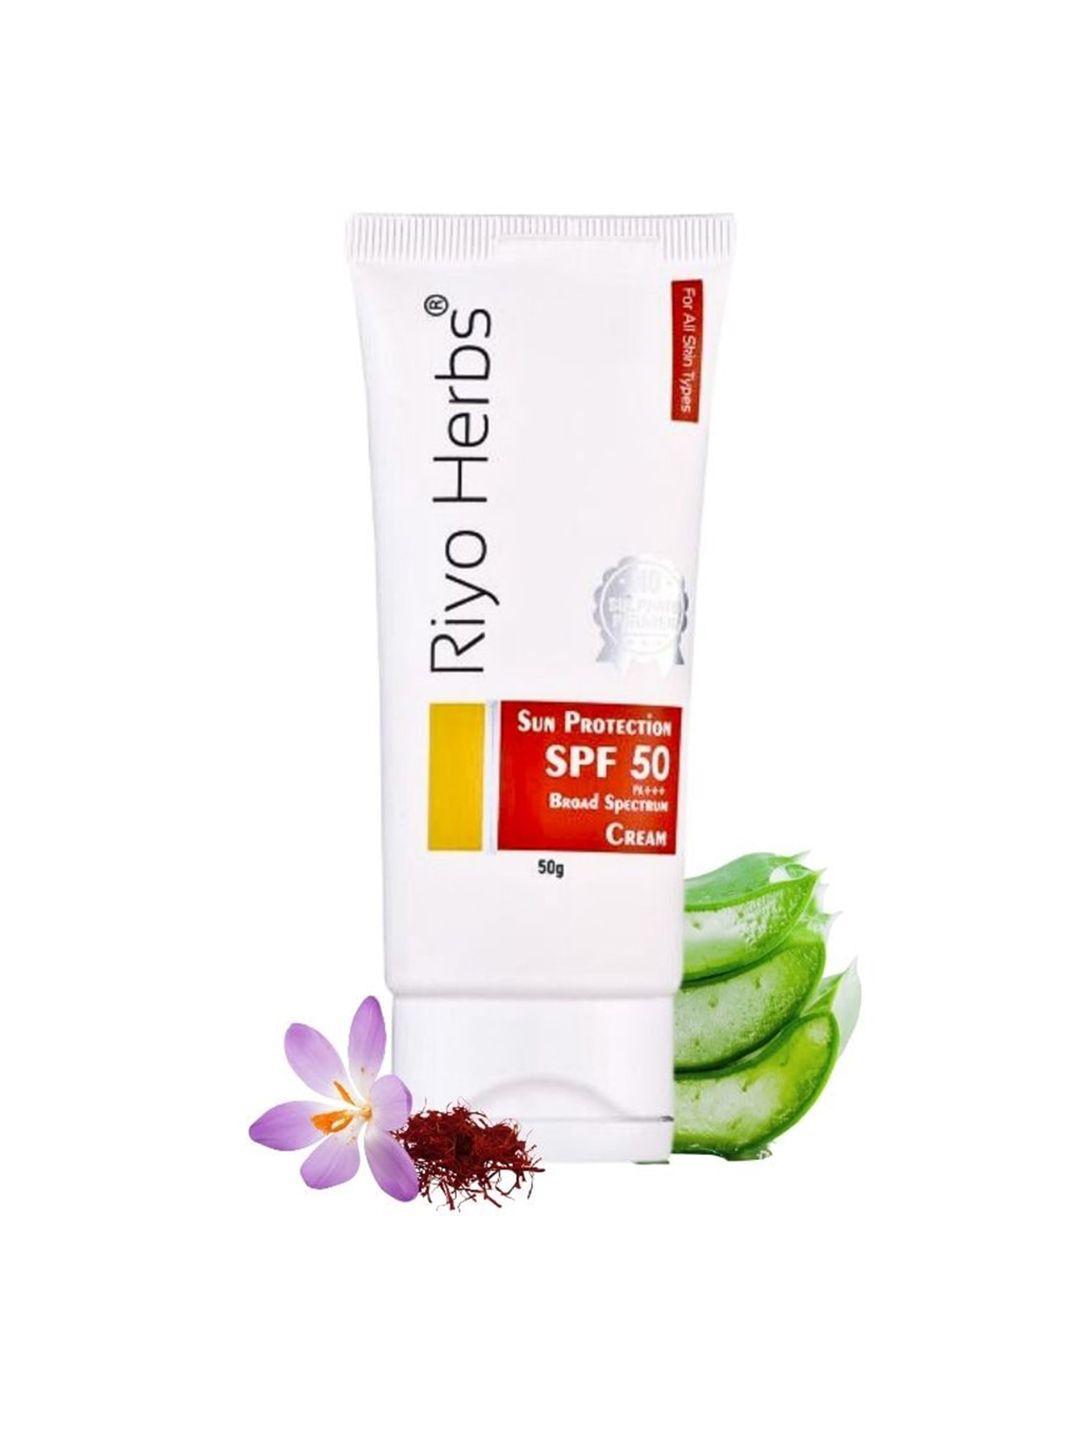 riyo herbs sun protection spf 50 pa+++ broad spectrum cream - 50 g